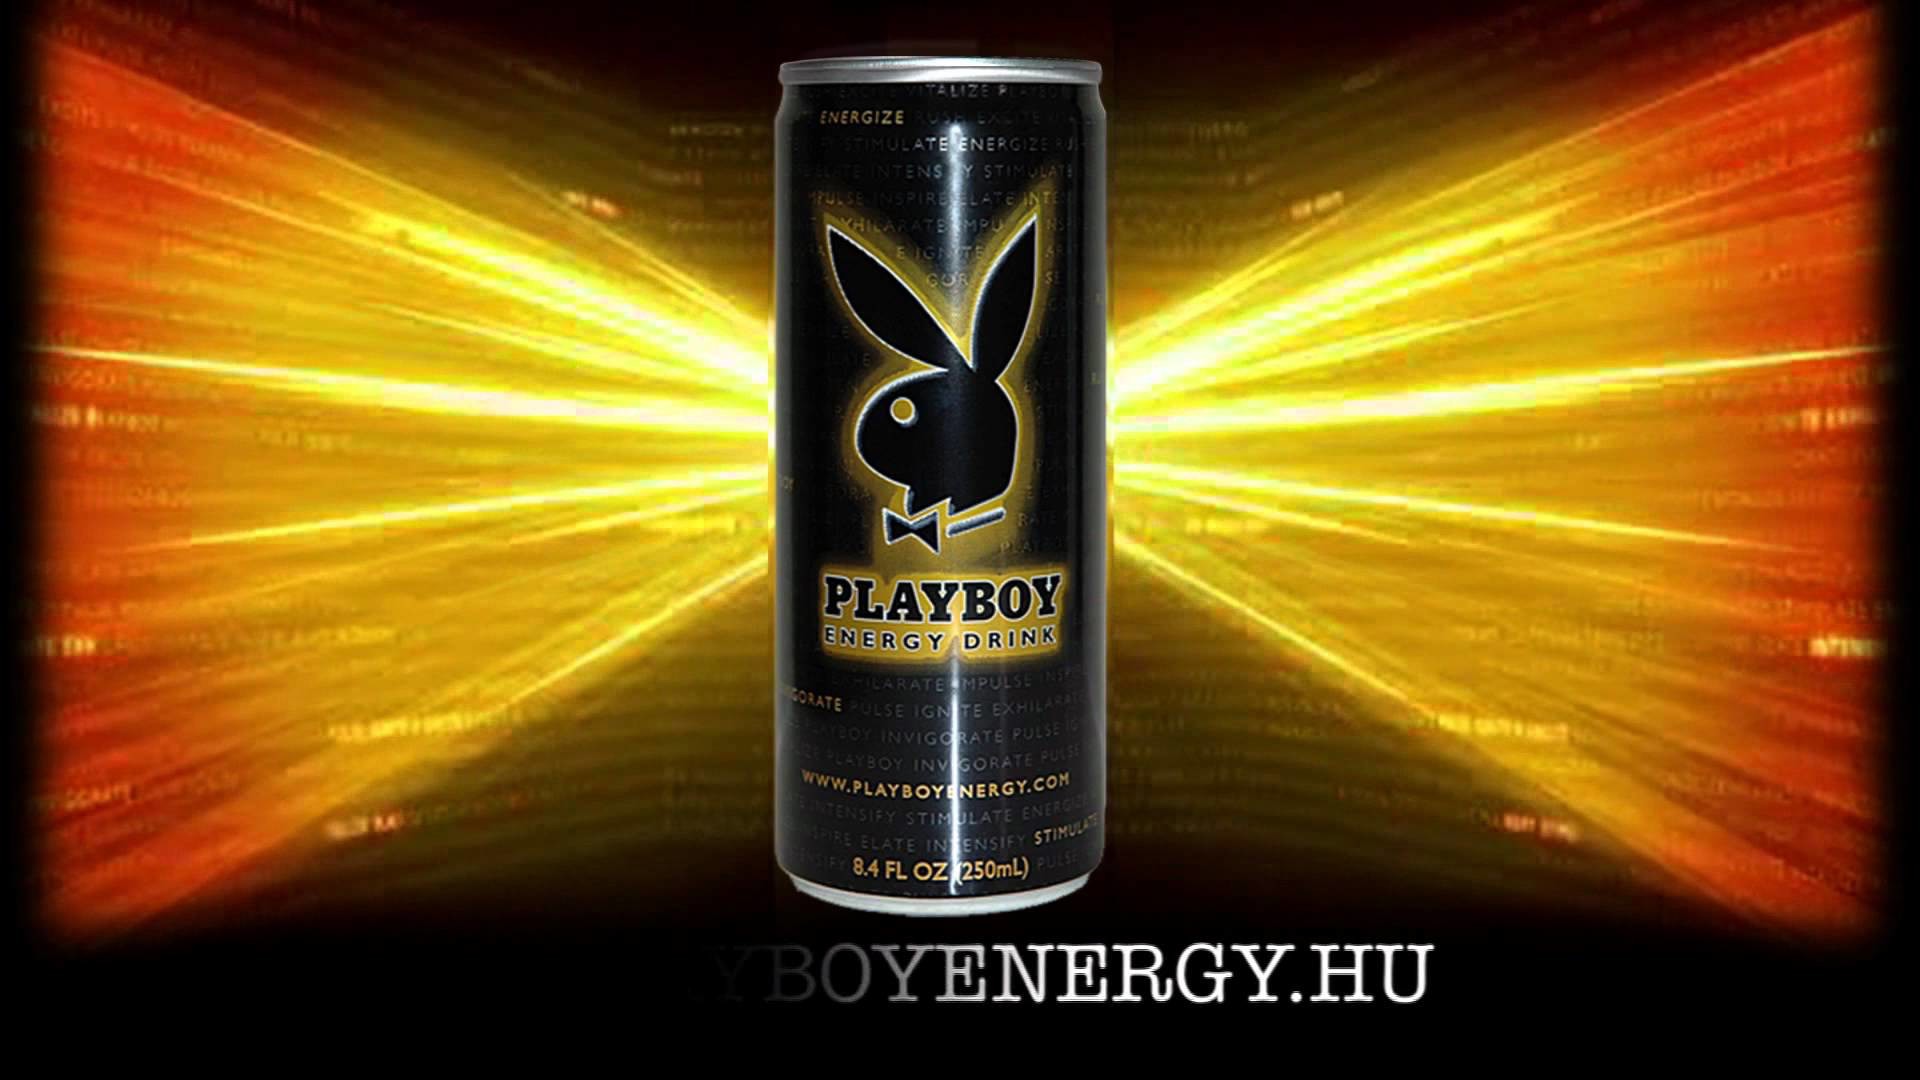 1920x1080 Playboy Energy Drink short promo video HD - YouTube